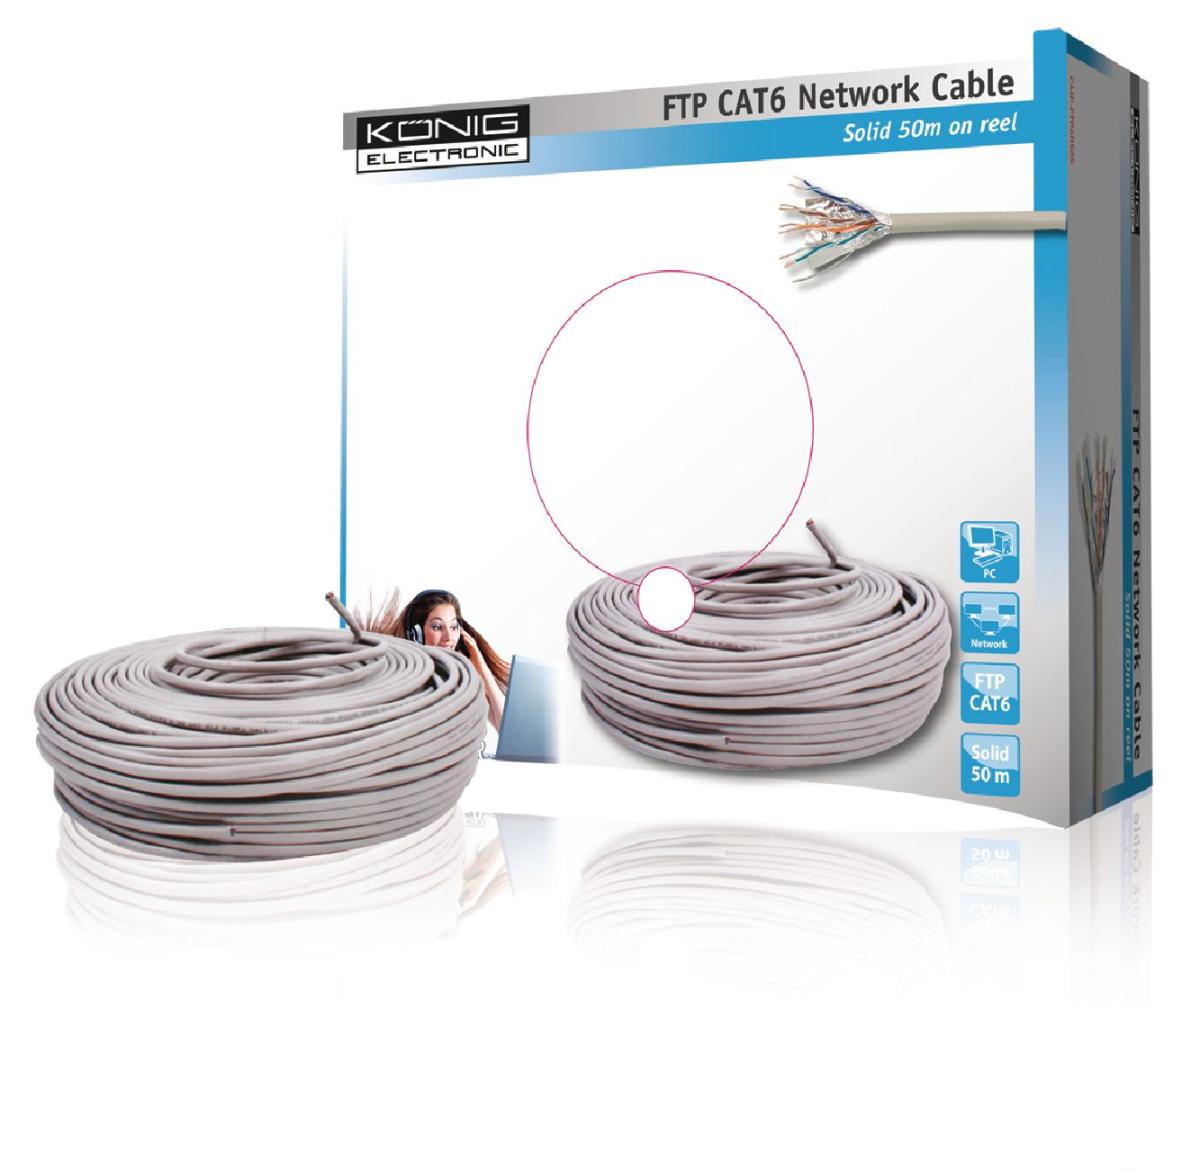 Cable ftp cat6 en bobine